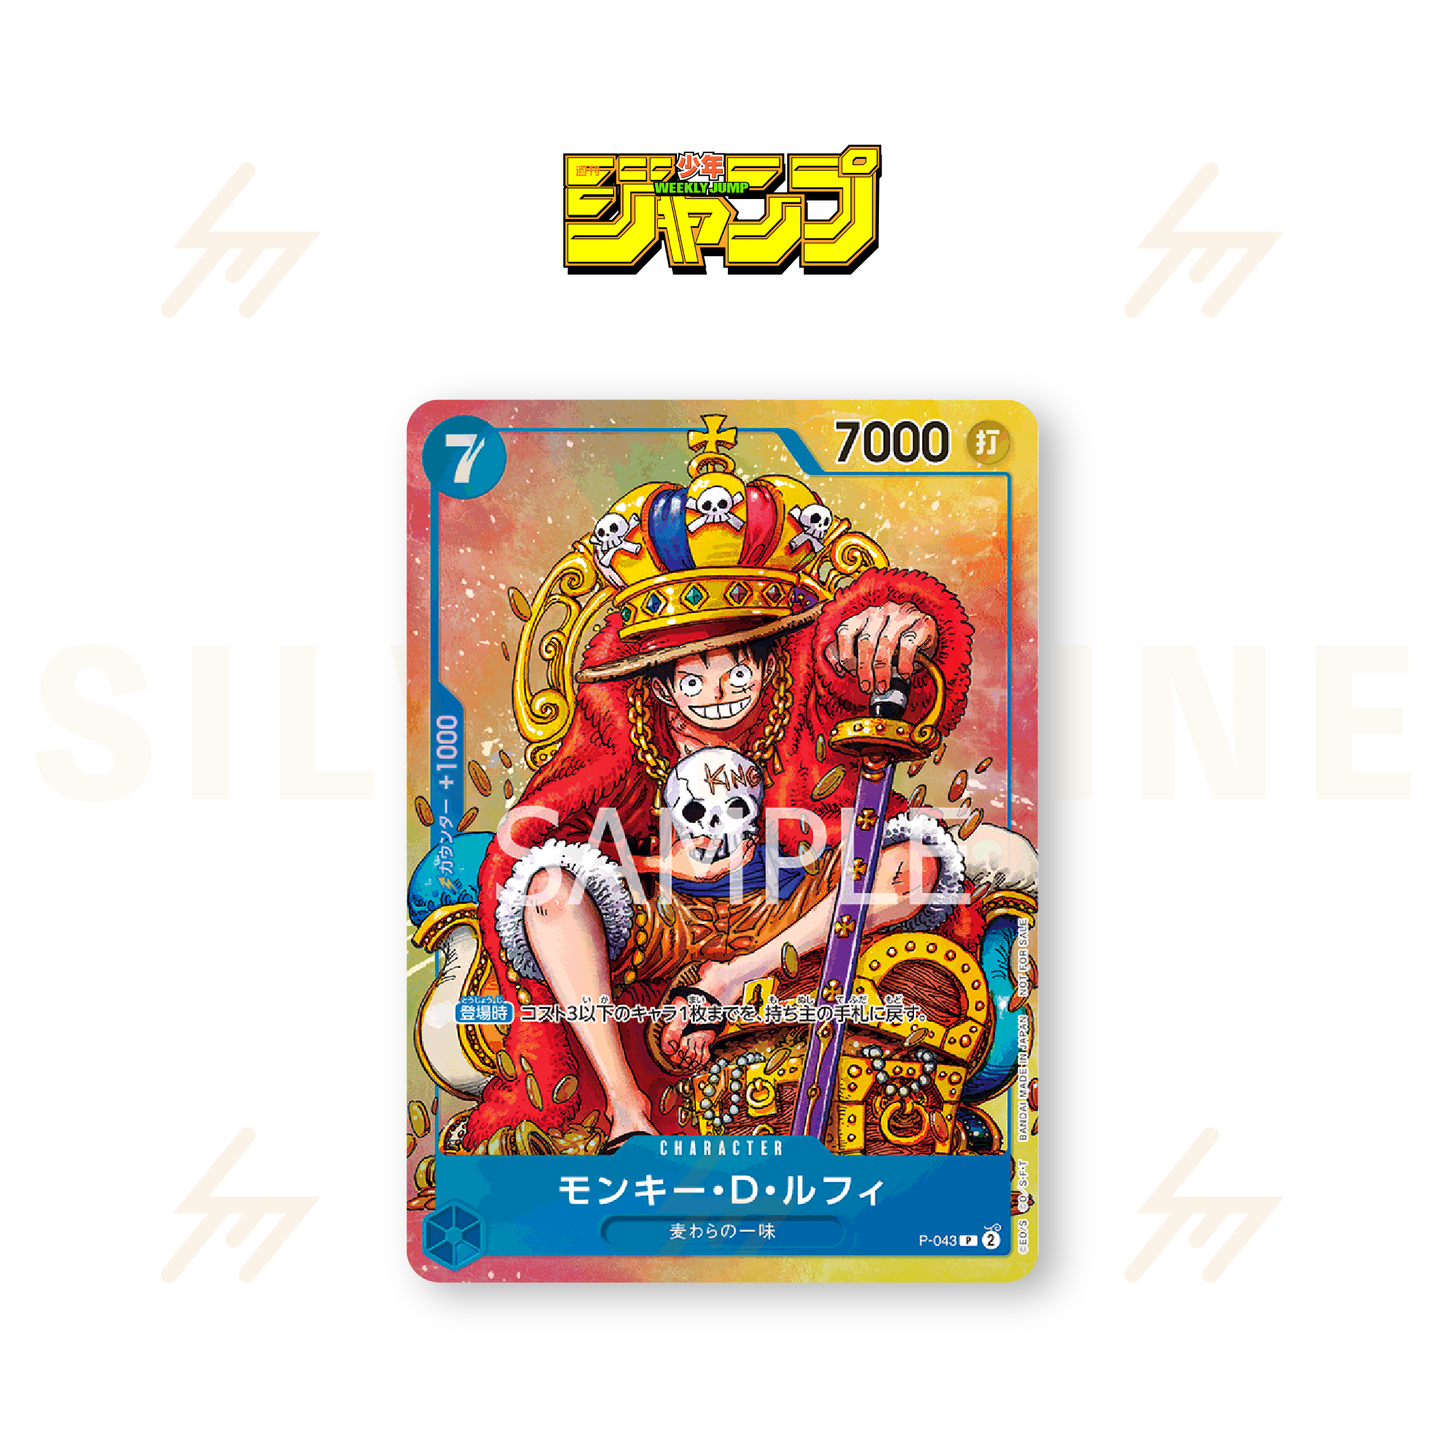 One Piece - Single Card - Weekly Shonen Jump appendix - Monkey D. Luffy